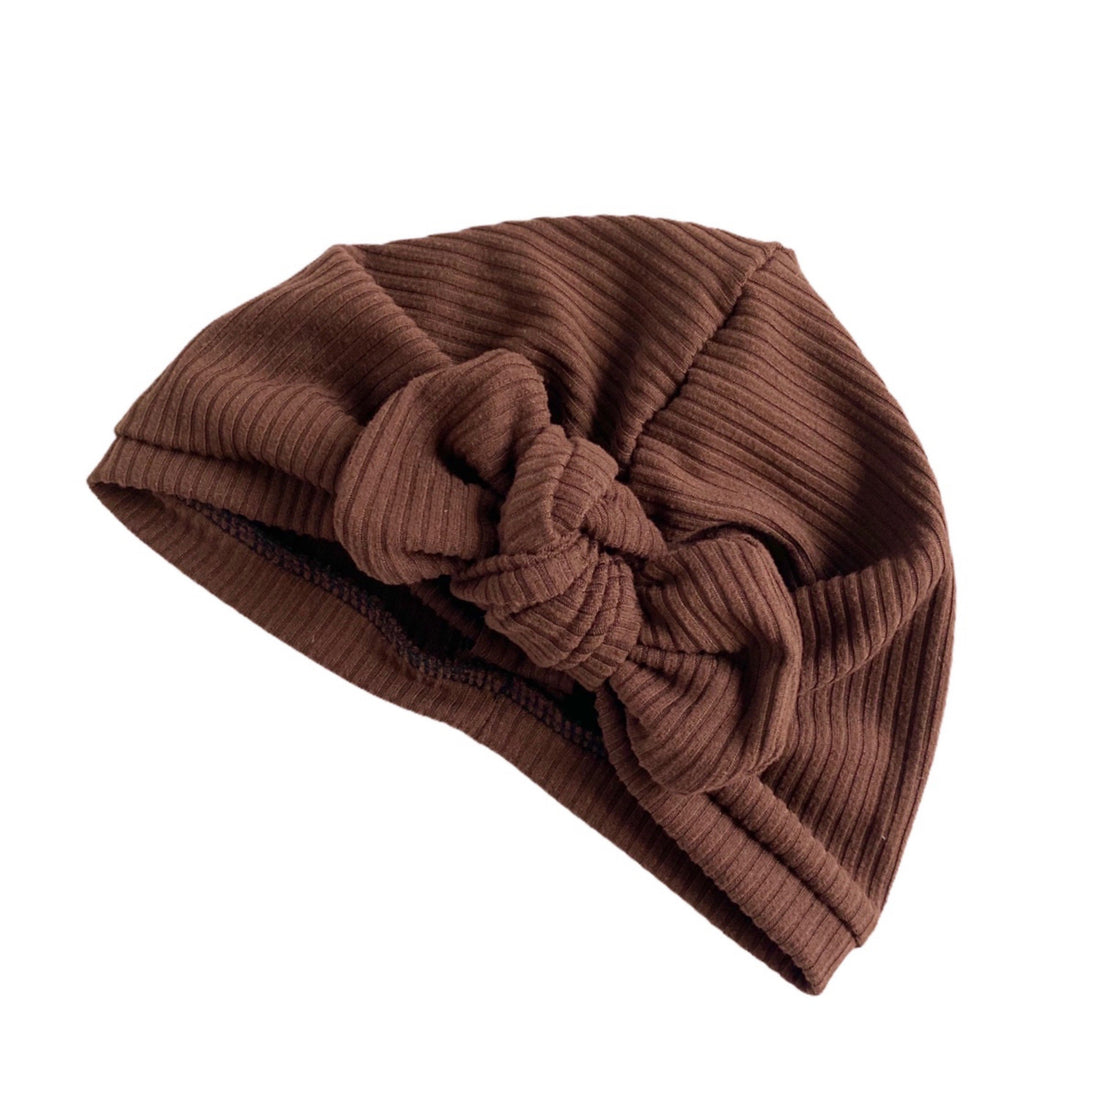 Cocoa Rib - Turban Hat